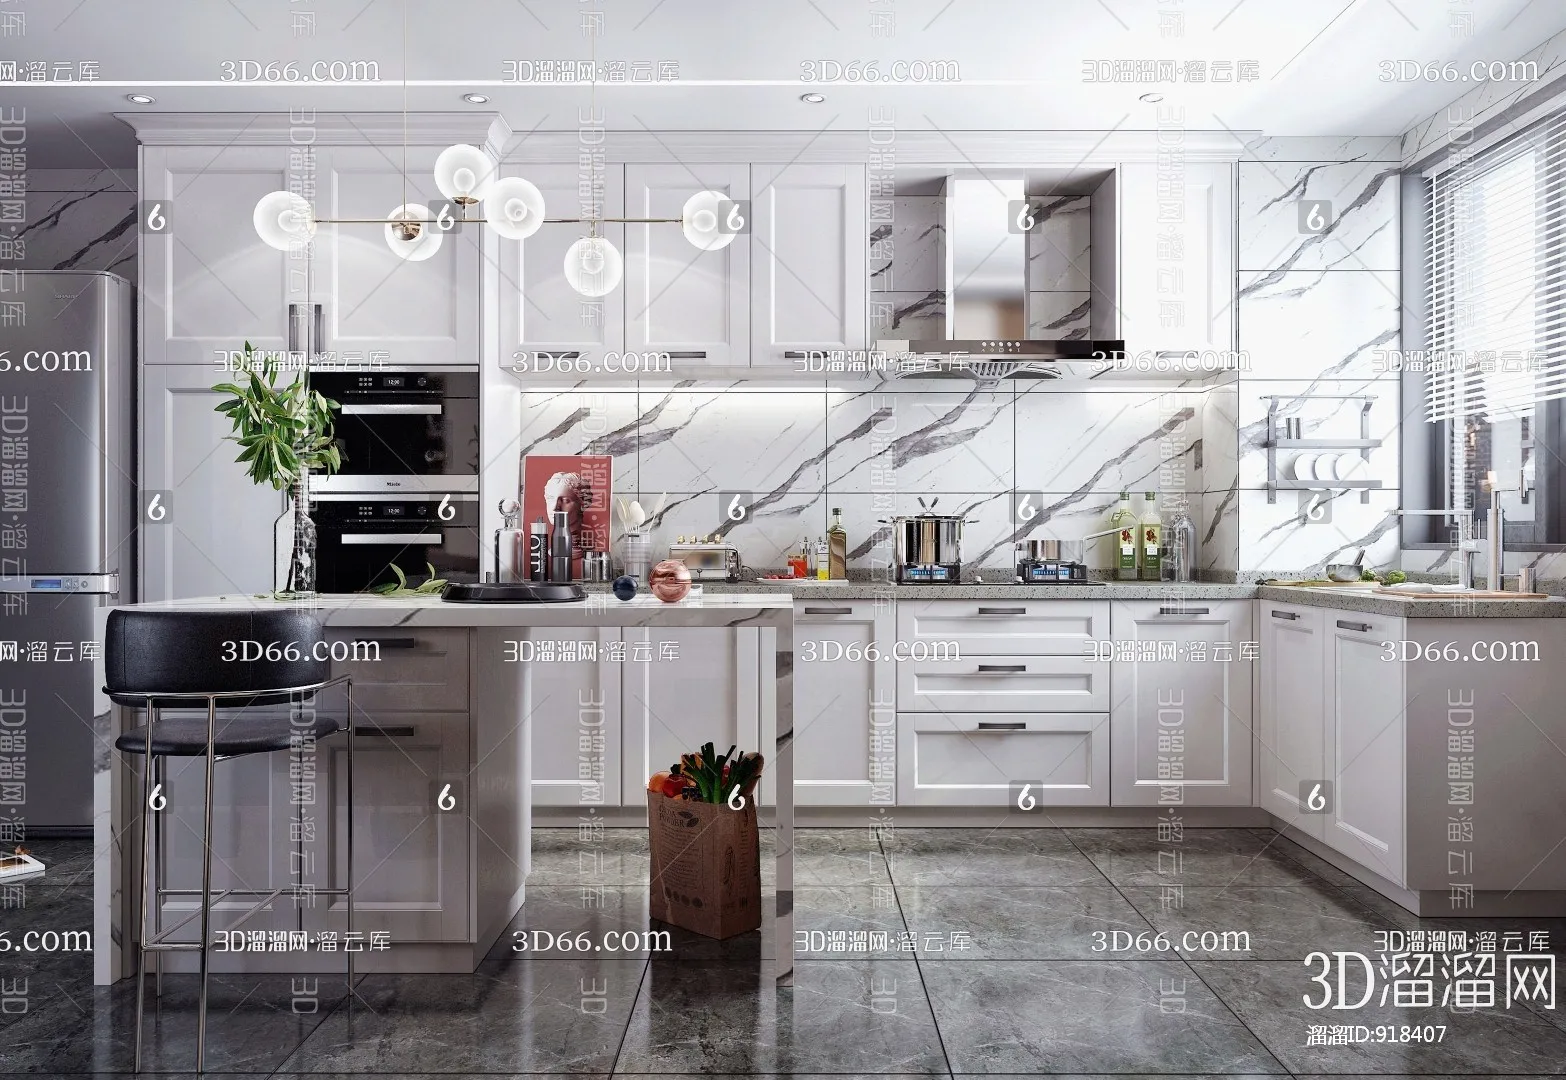 Kitchen 3D Scenes – 0573